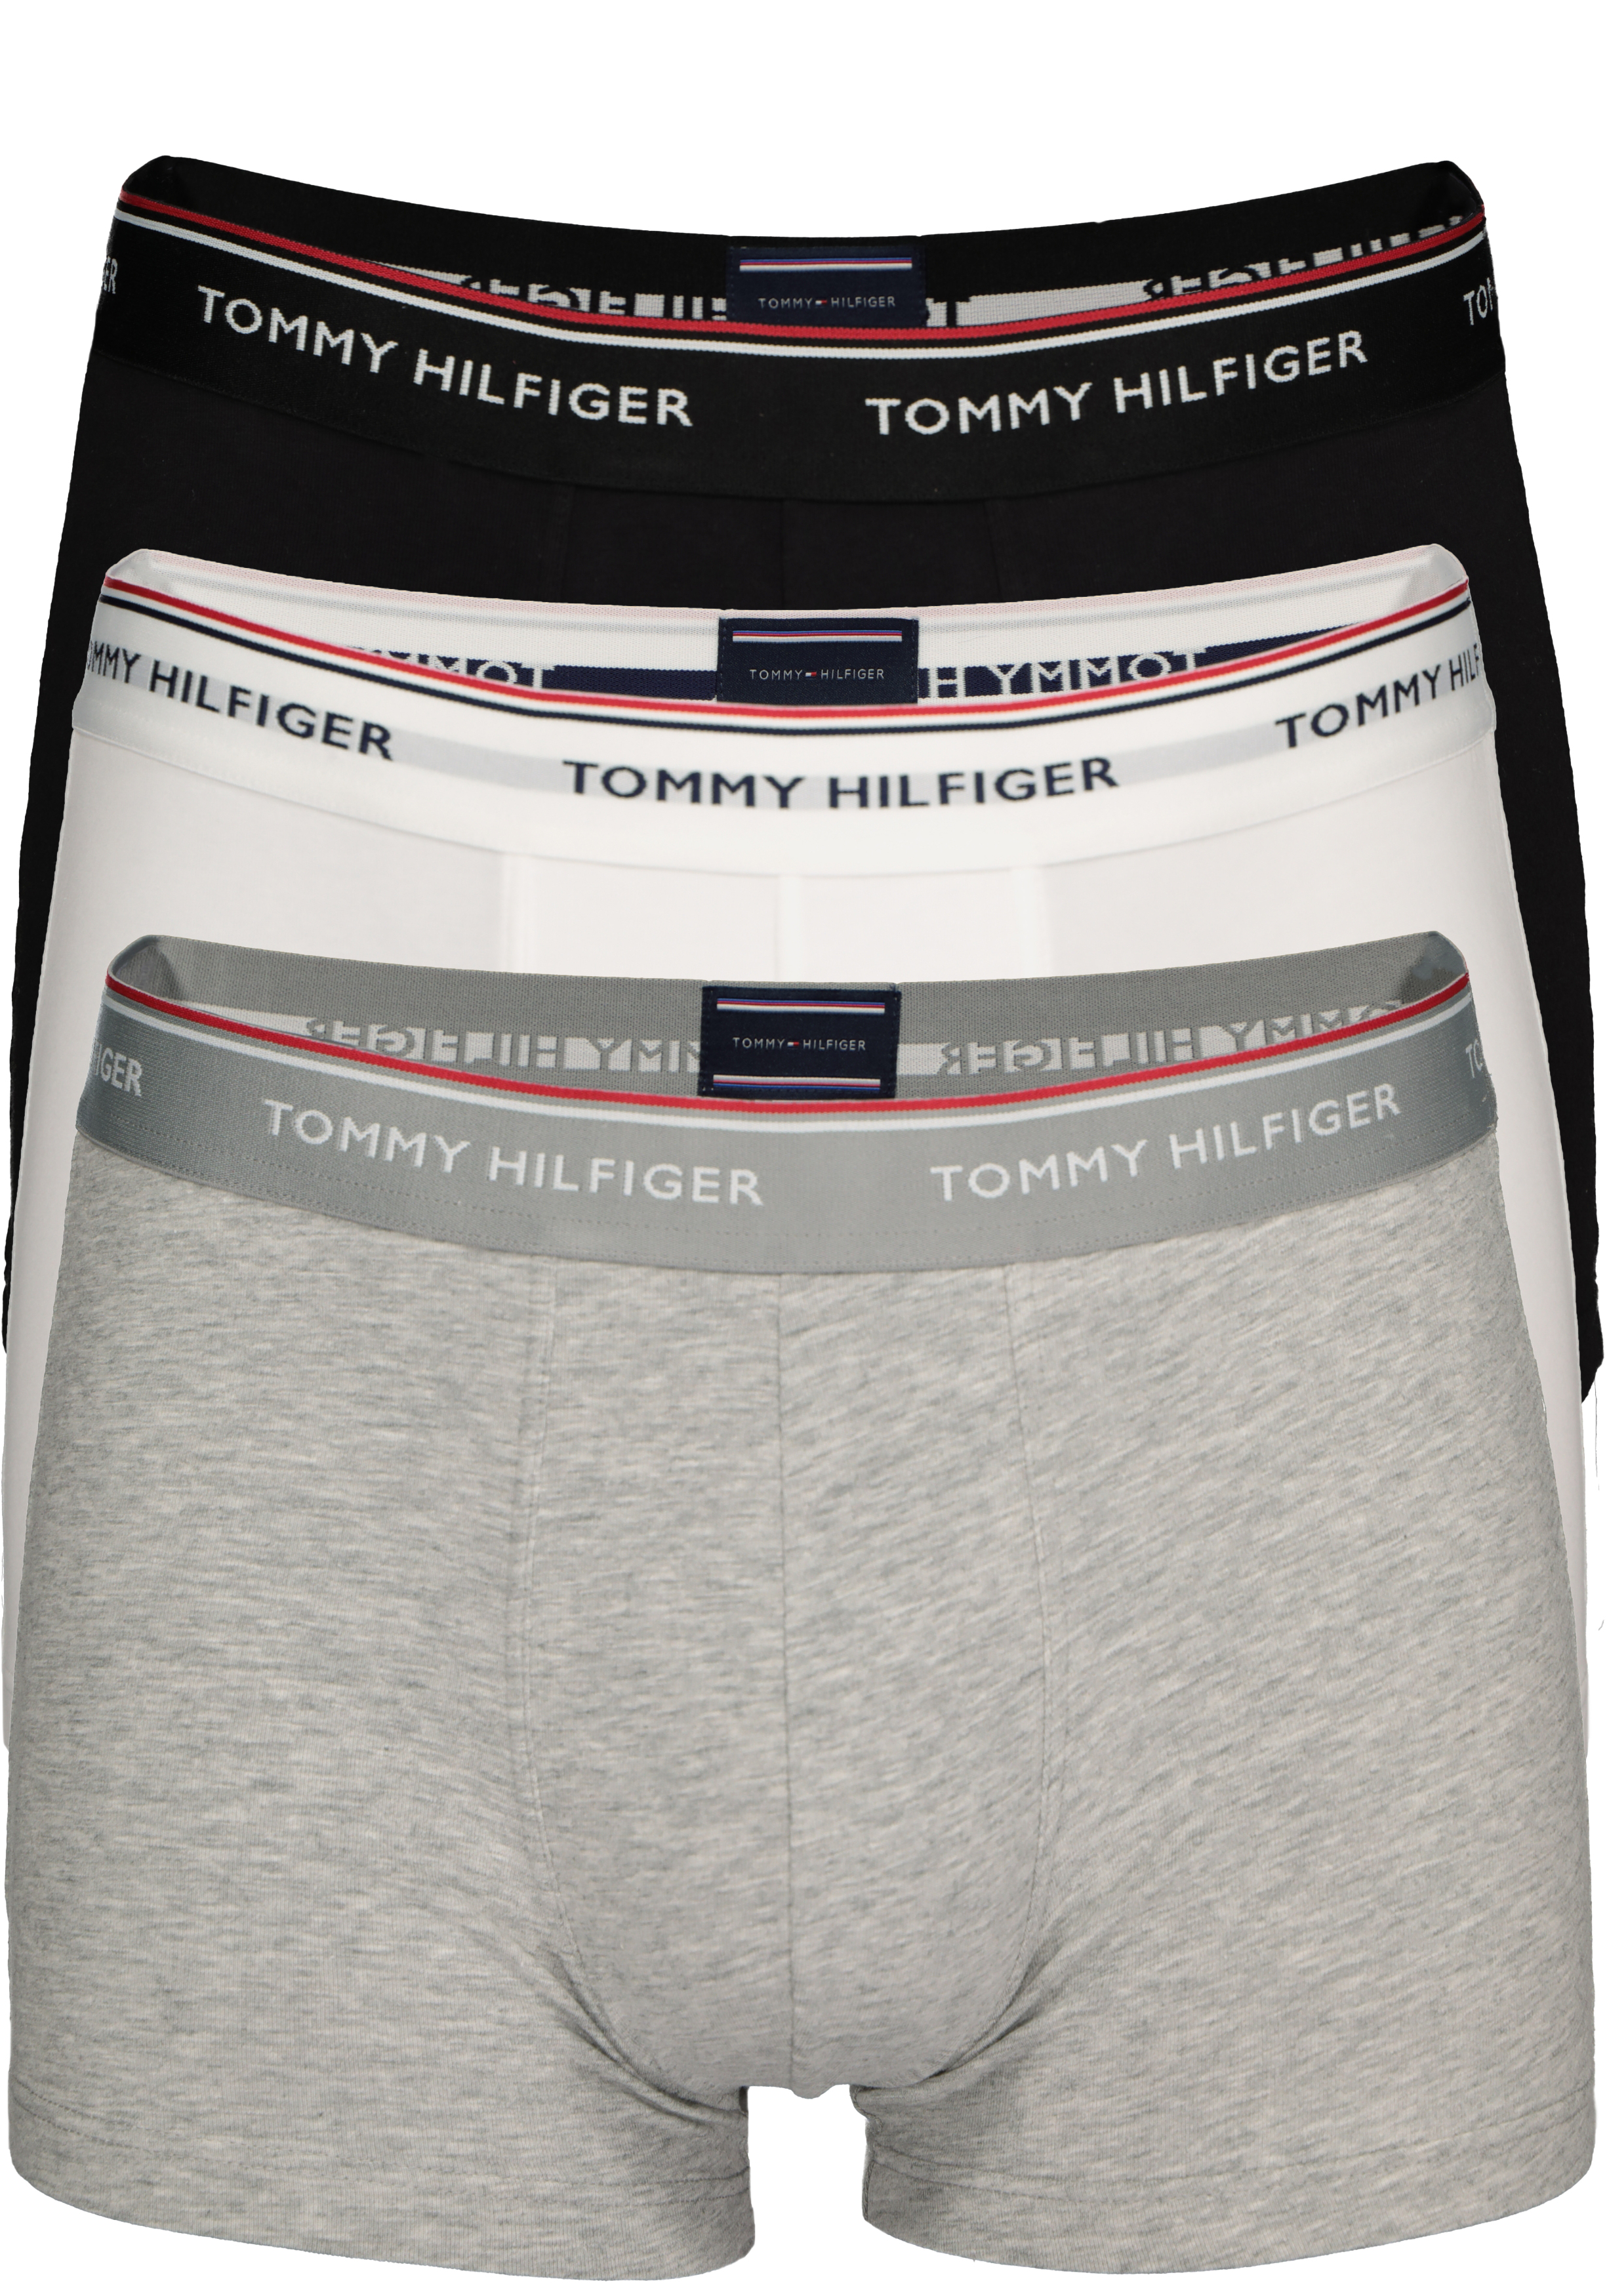 Tommy Hilfiger trunks (3-pack), heren boxers normale lengte, zwart, wit en grijs